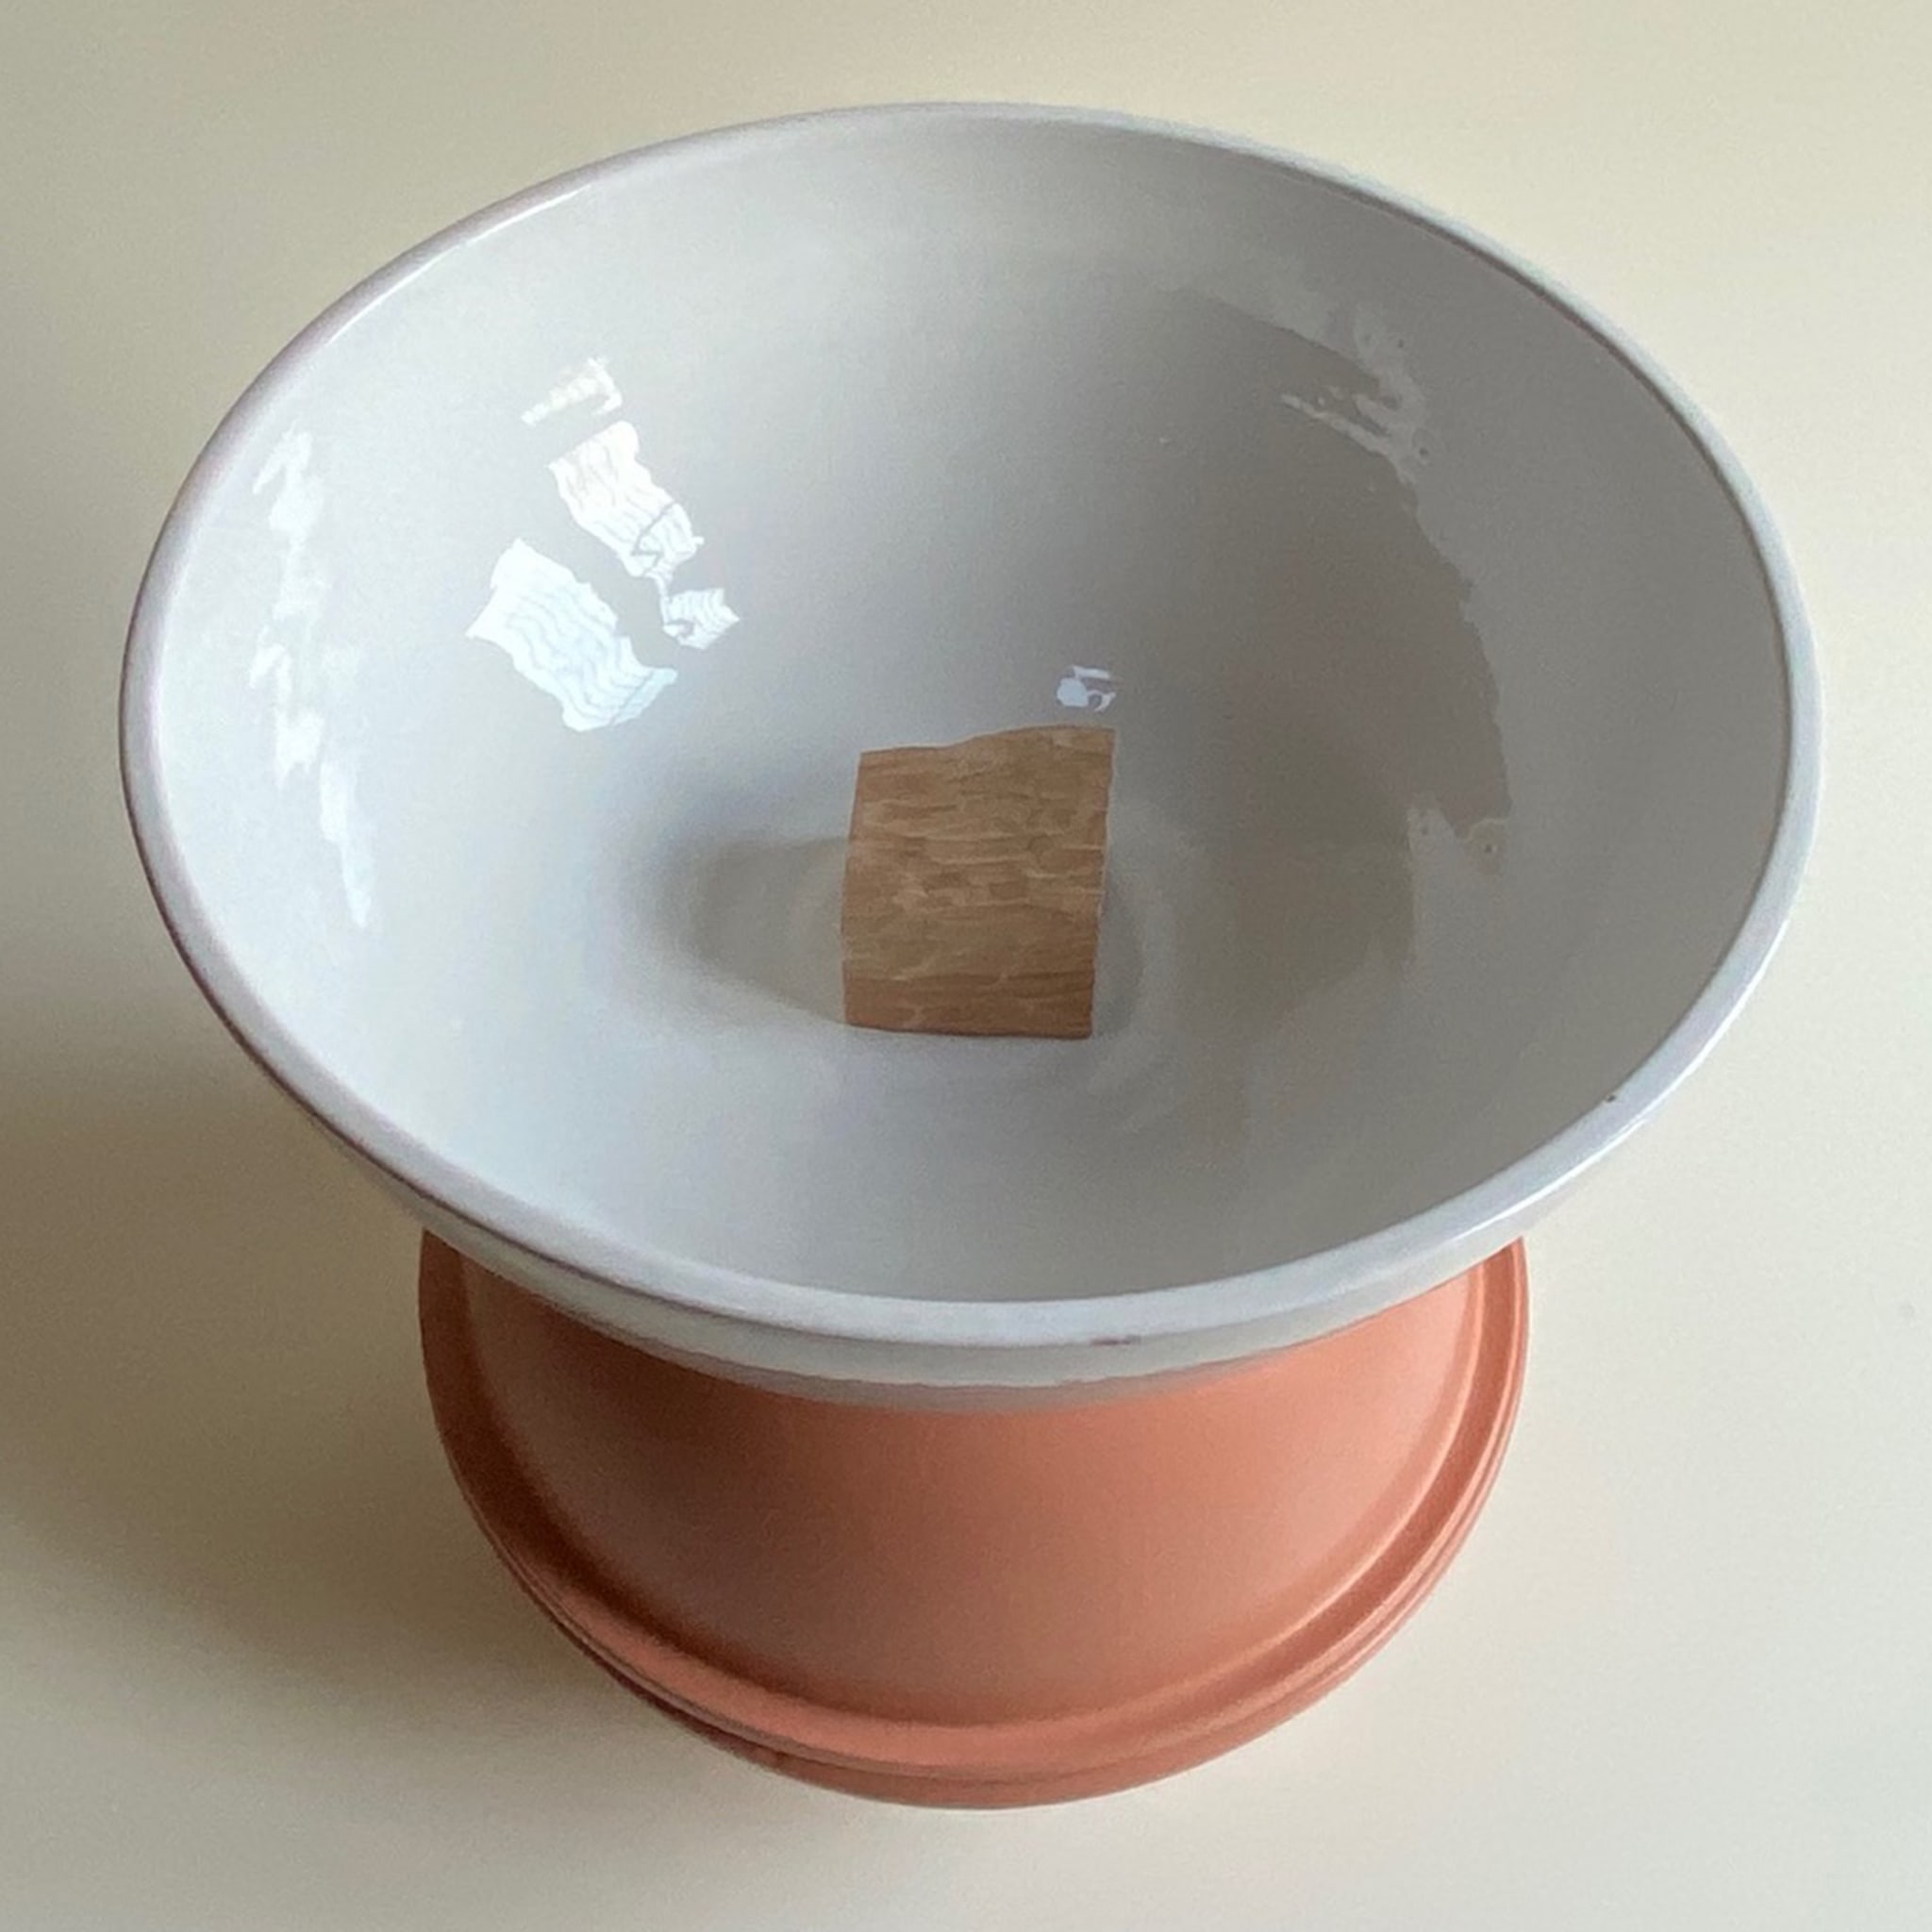 Pink Vase by Meccani Studio - Alternative view 1